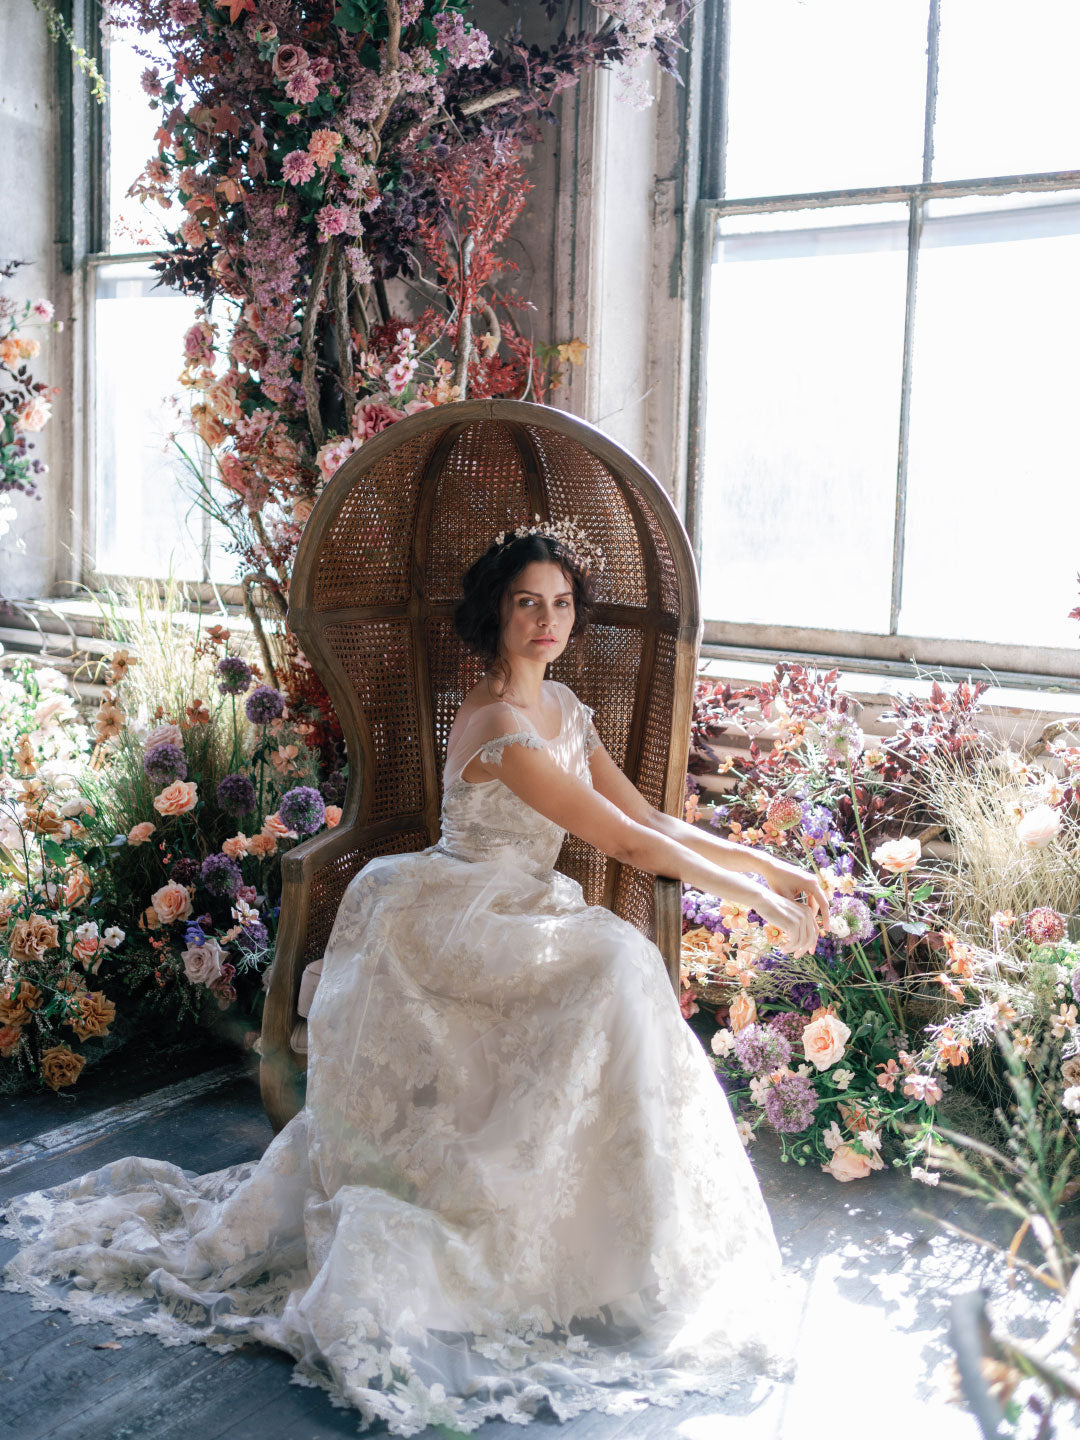 Vermeil Couture Wedding Dress by Claire Pettibone